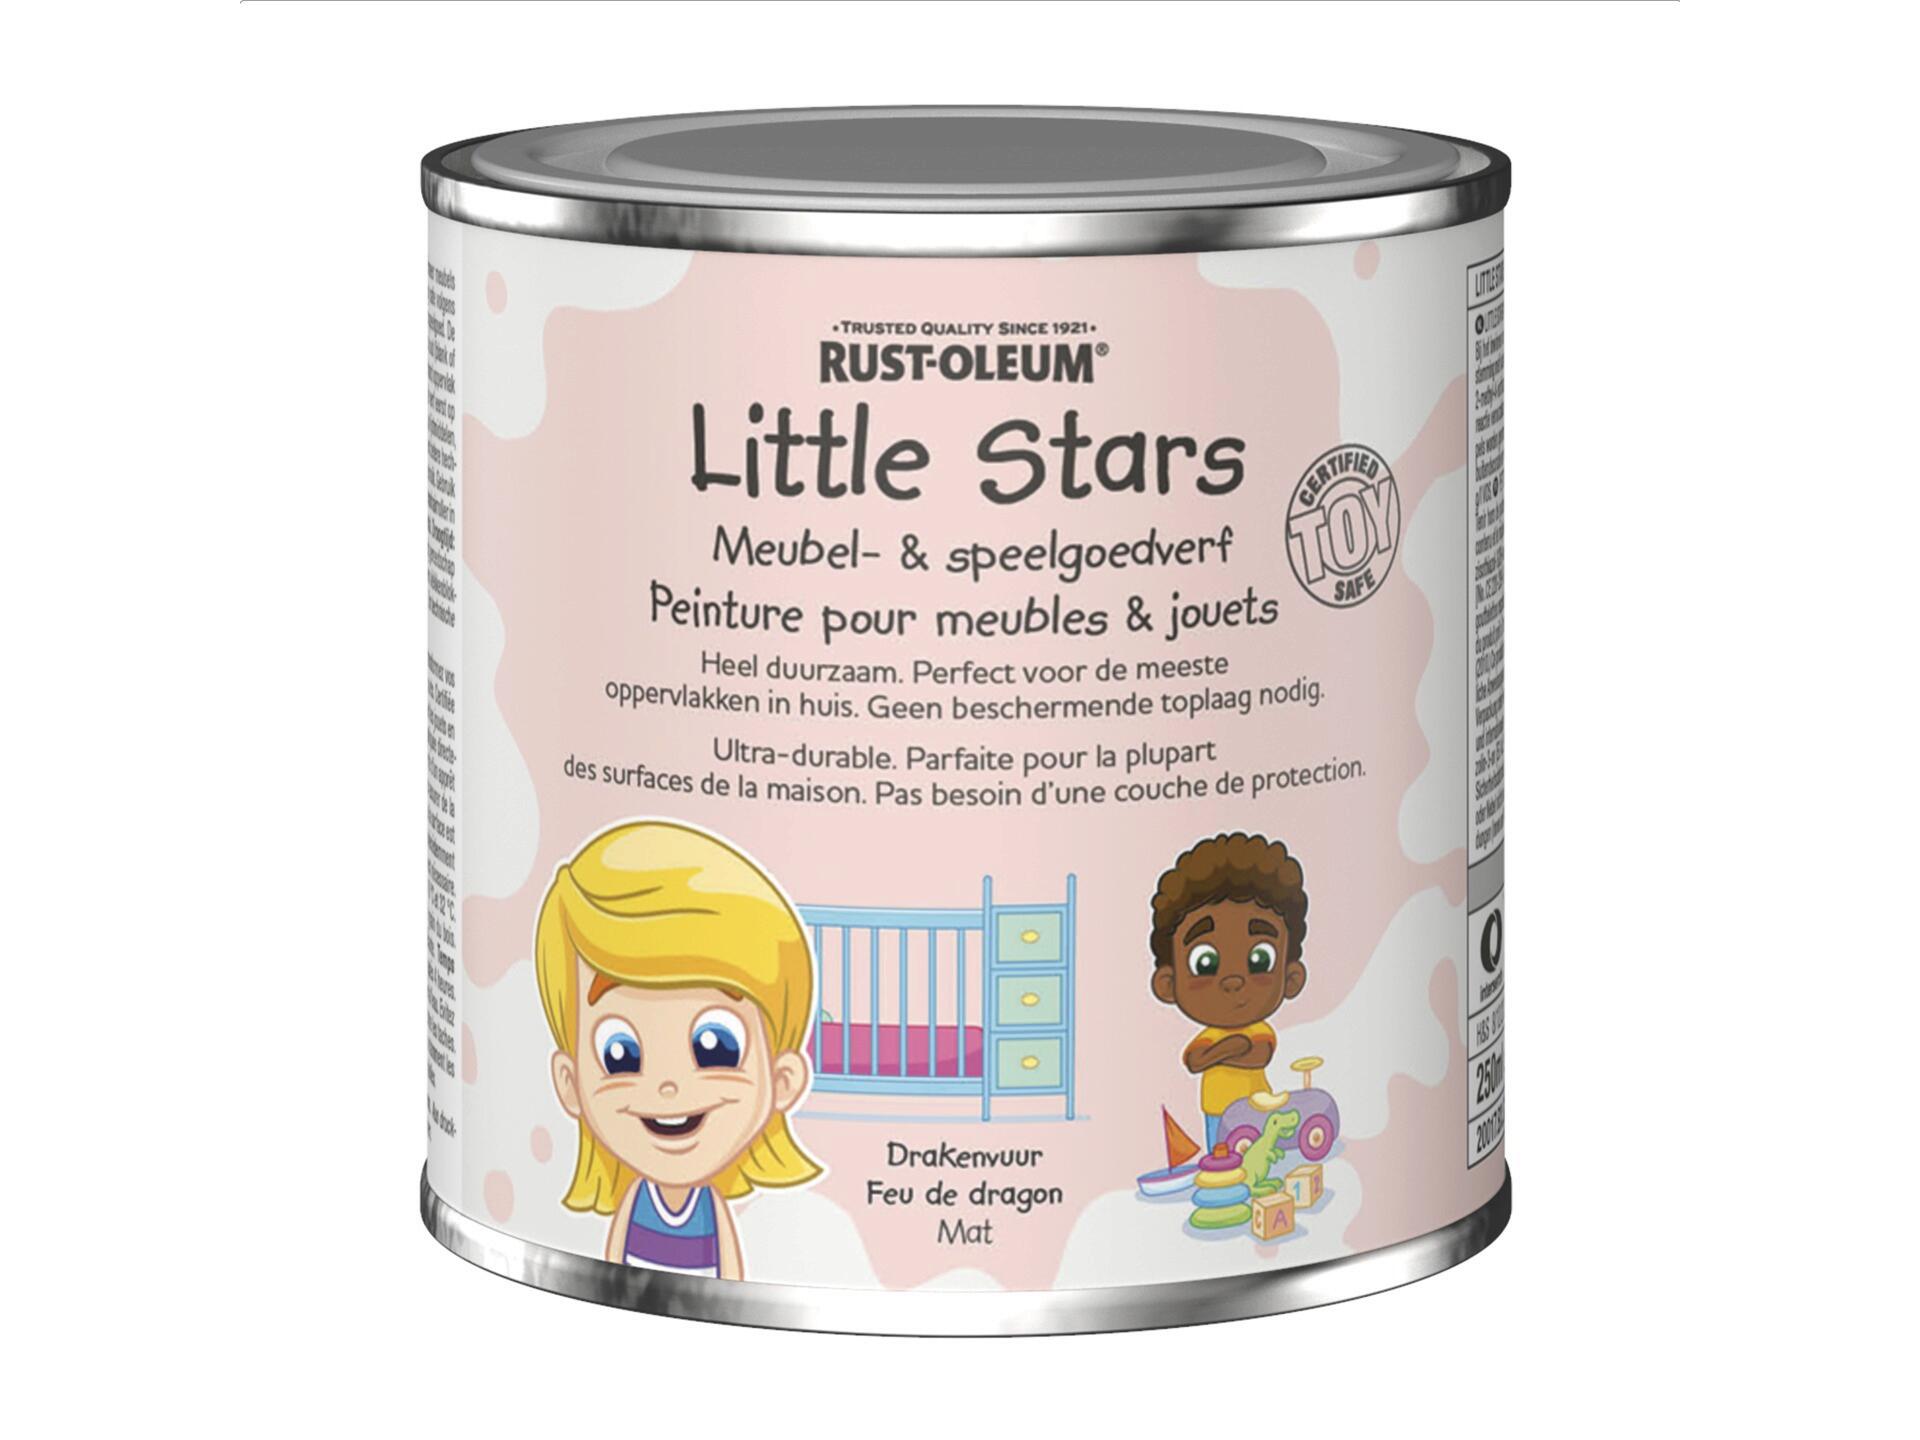 Rust-oleum Little Stars meubel- en speelgoedverf 250ml drakenvuur